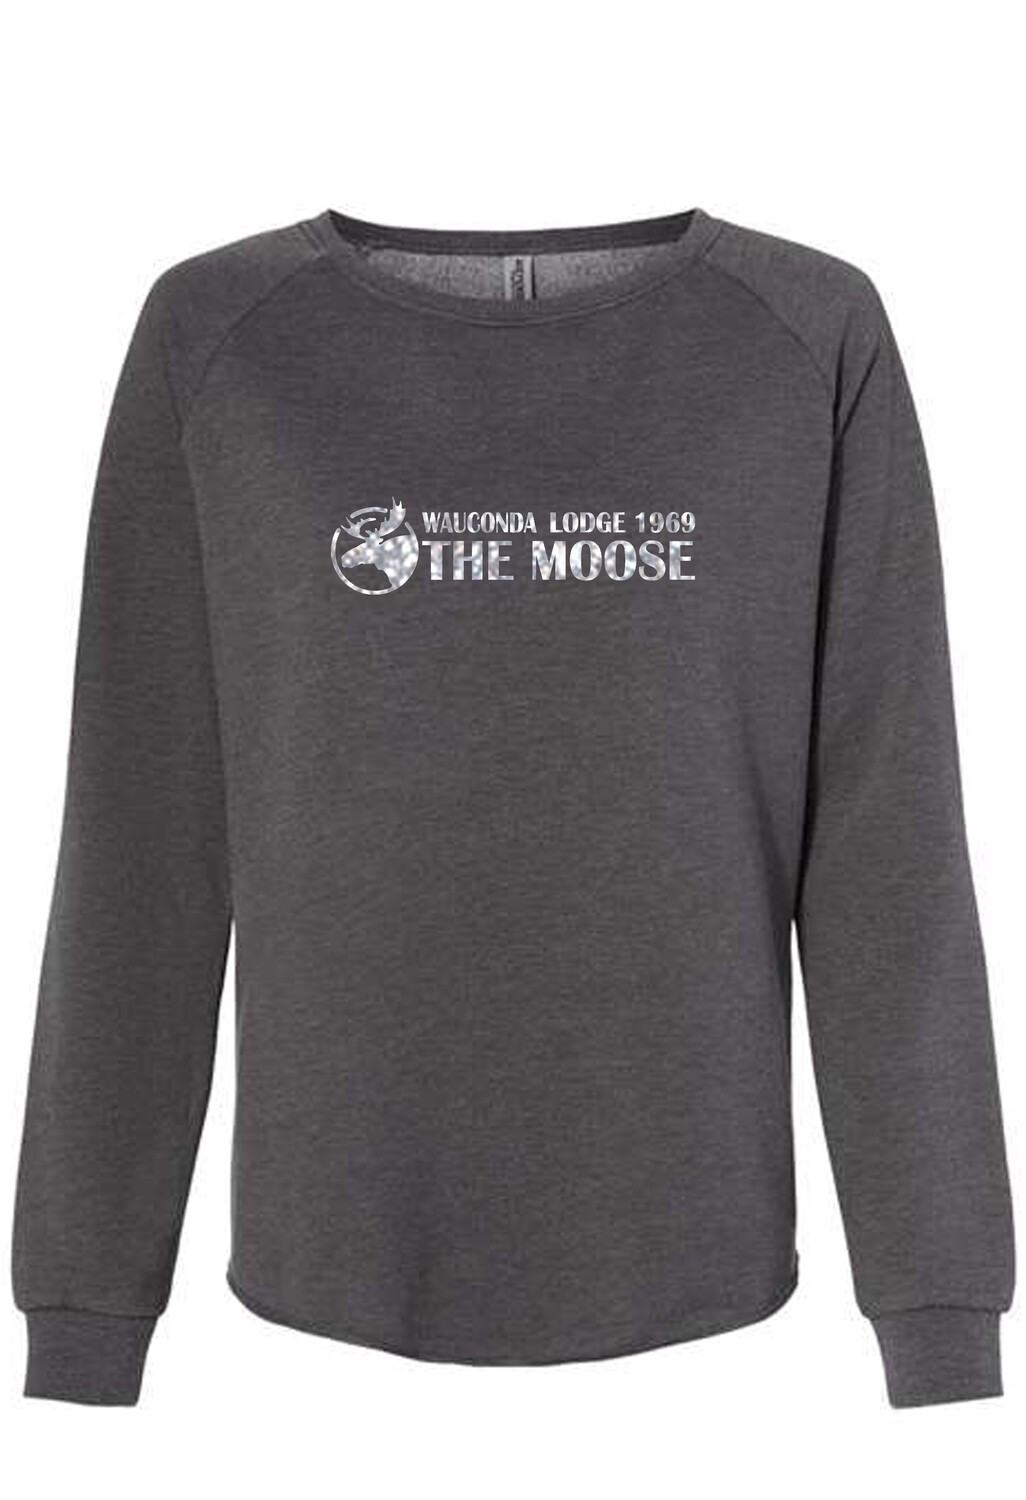 The Moose Lightweight Sweatshirt with Glitter